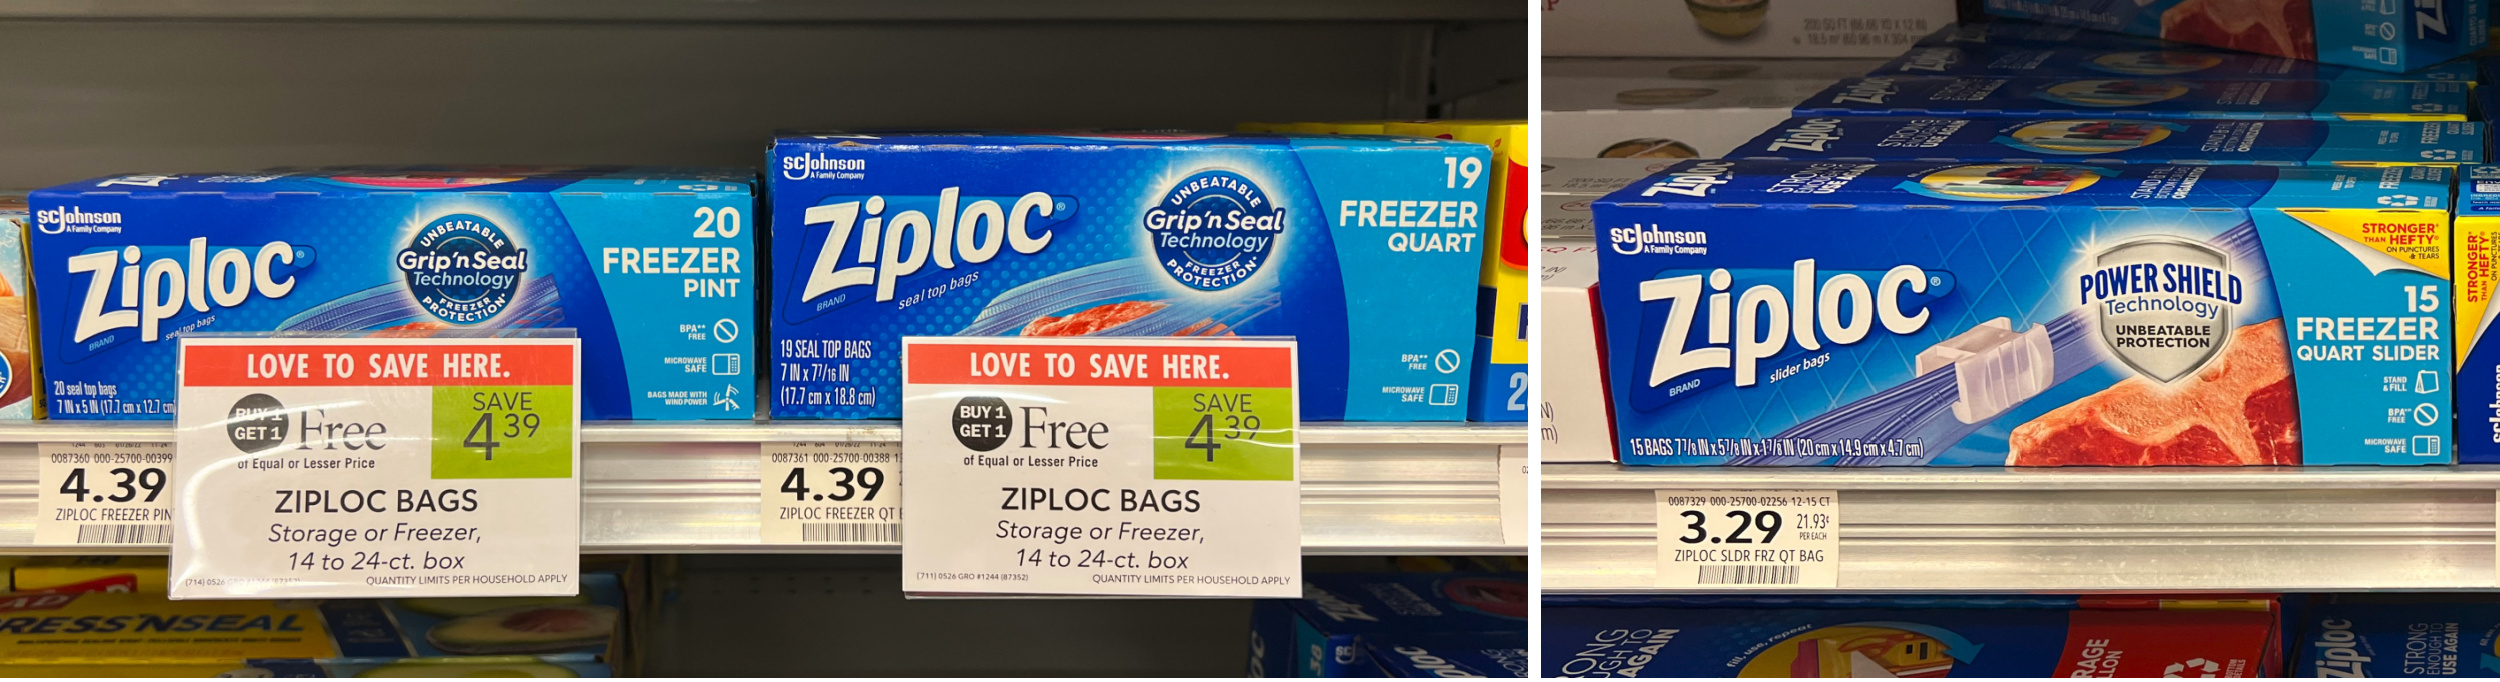 Ziploc Freezer Bag, Pint, 20-Count Pack of 12